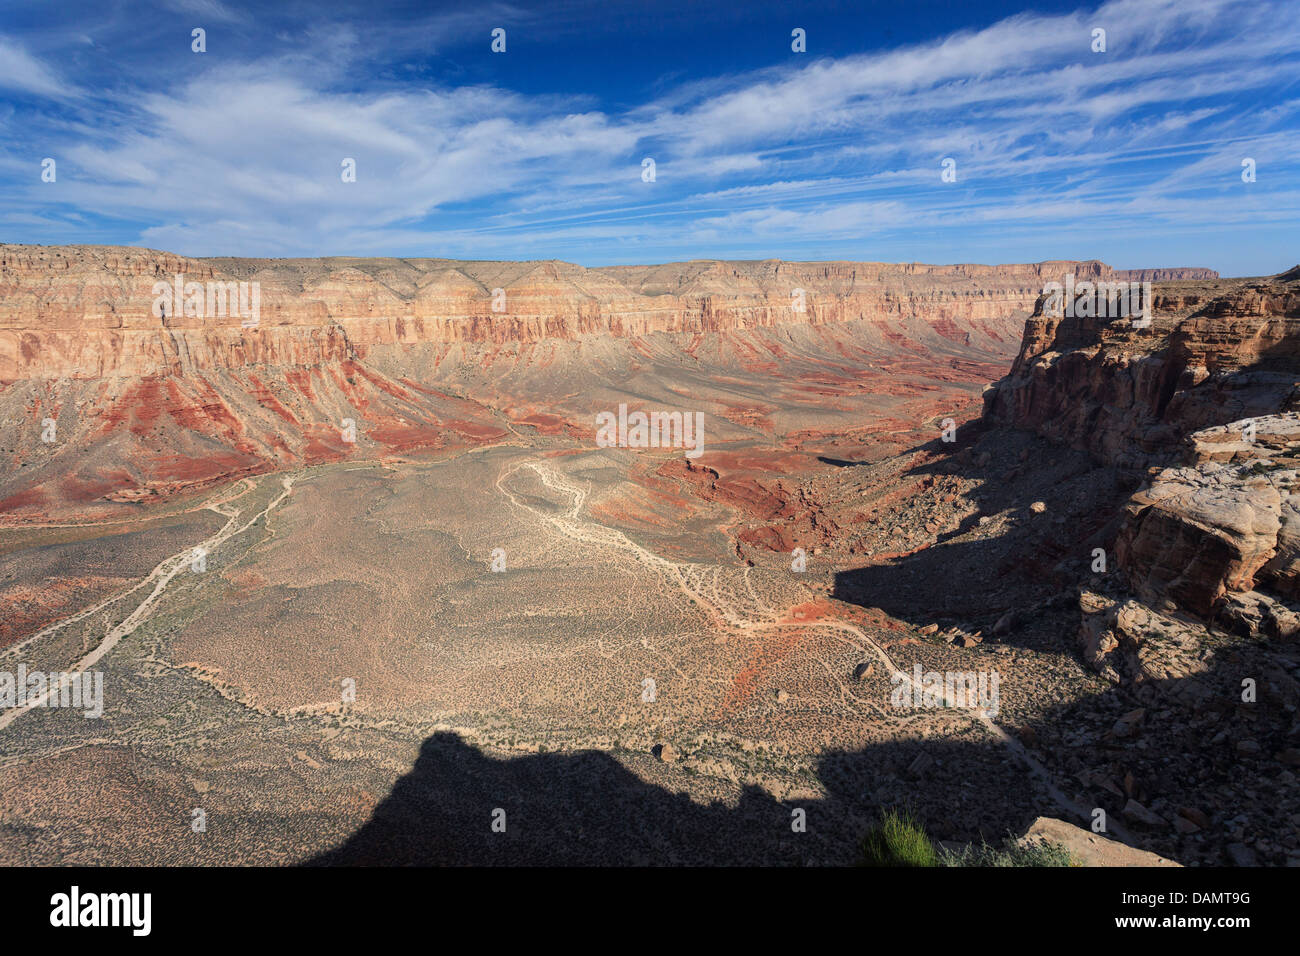 USA, Arizona, Gran Canyon, Havasu Canyon (Hualapai Reservation) Stock Photo